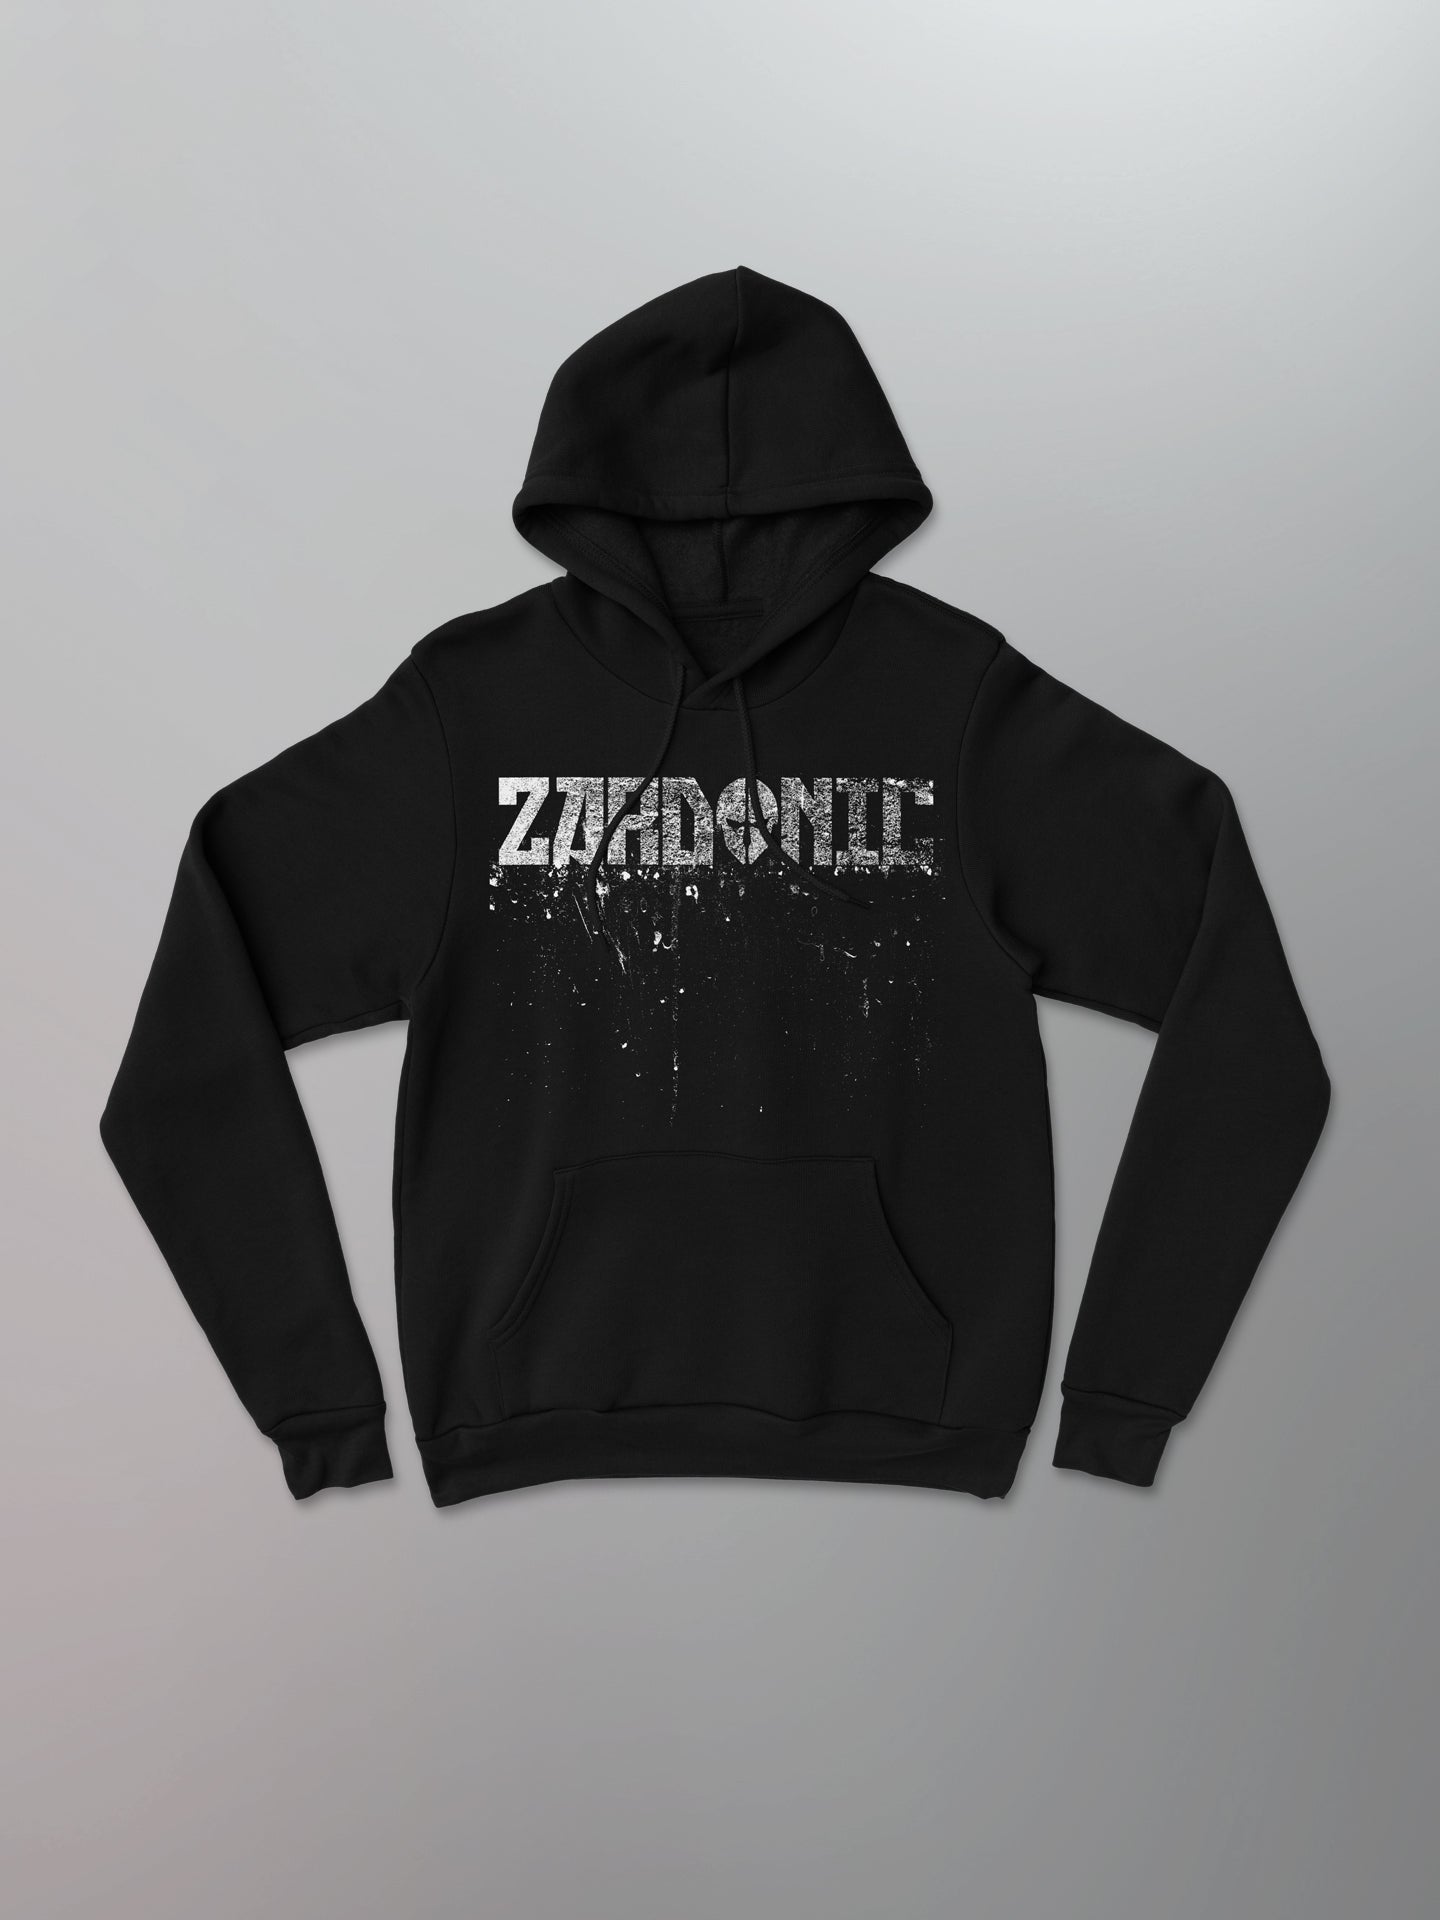 Zardonic - Logo Hoodie